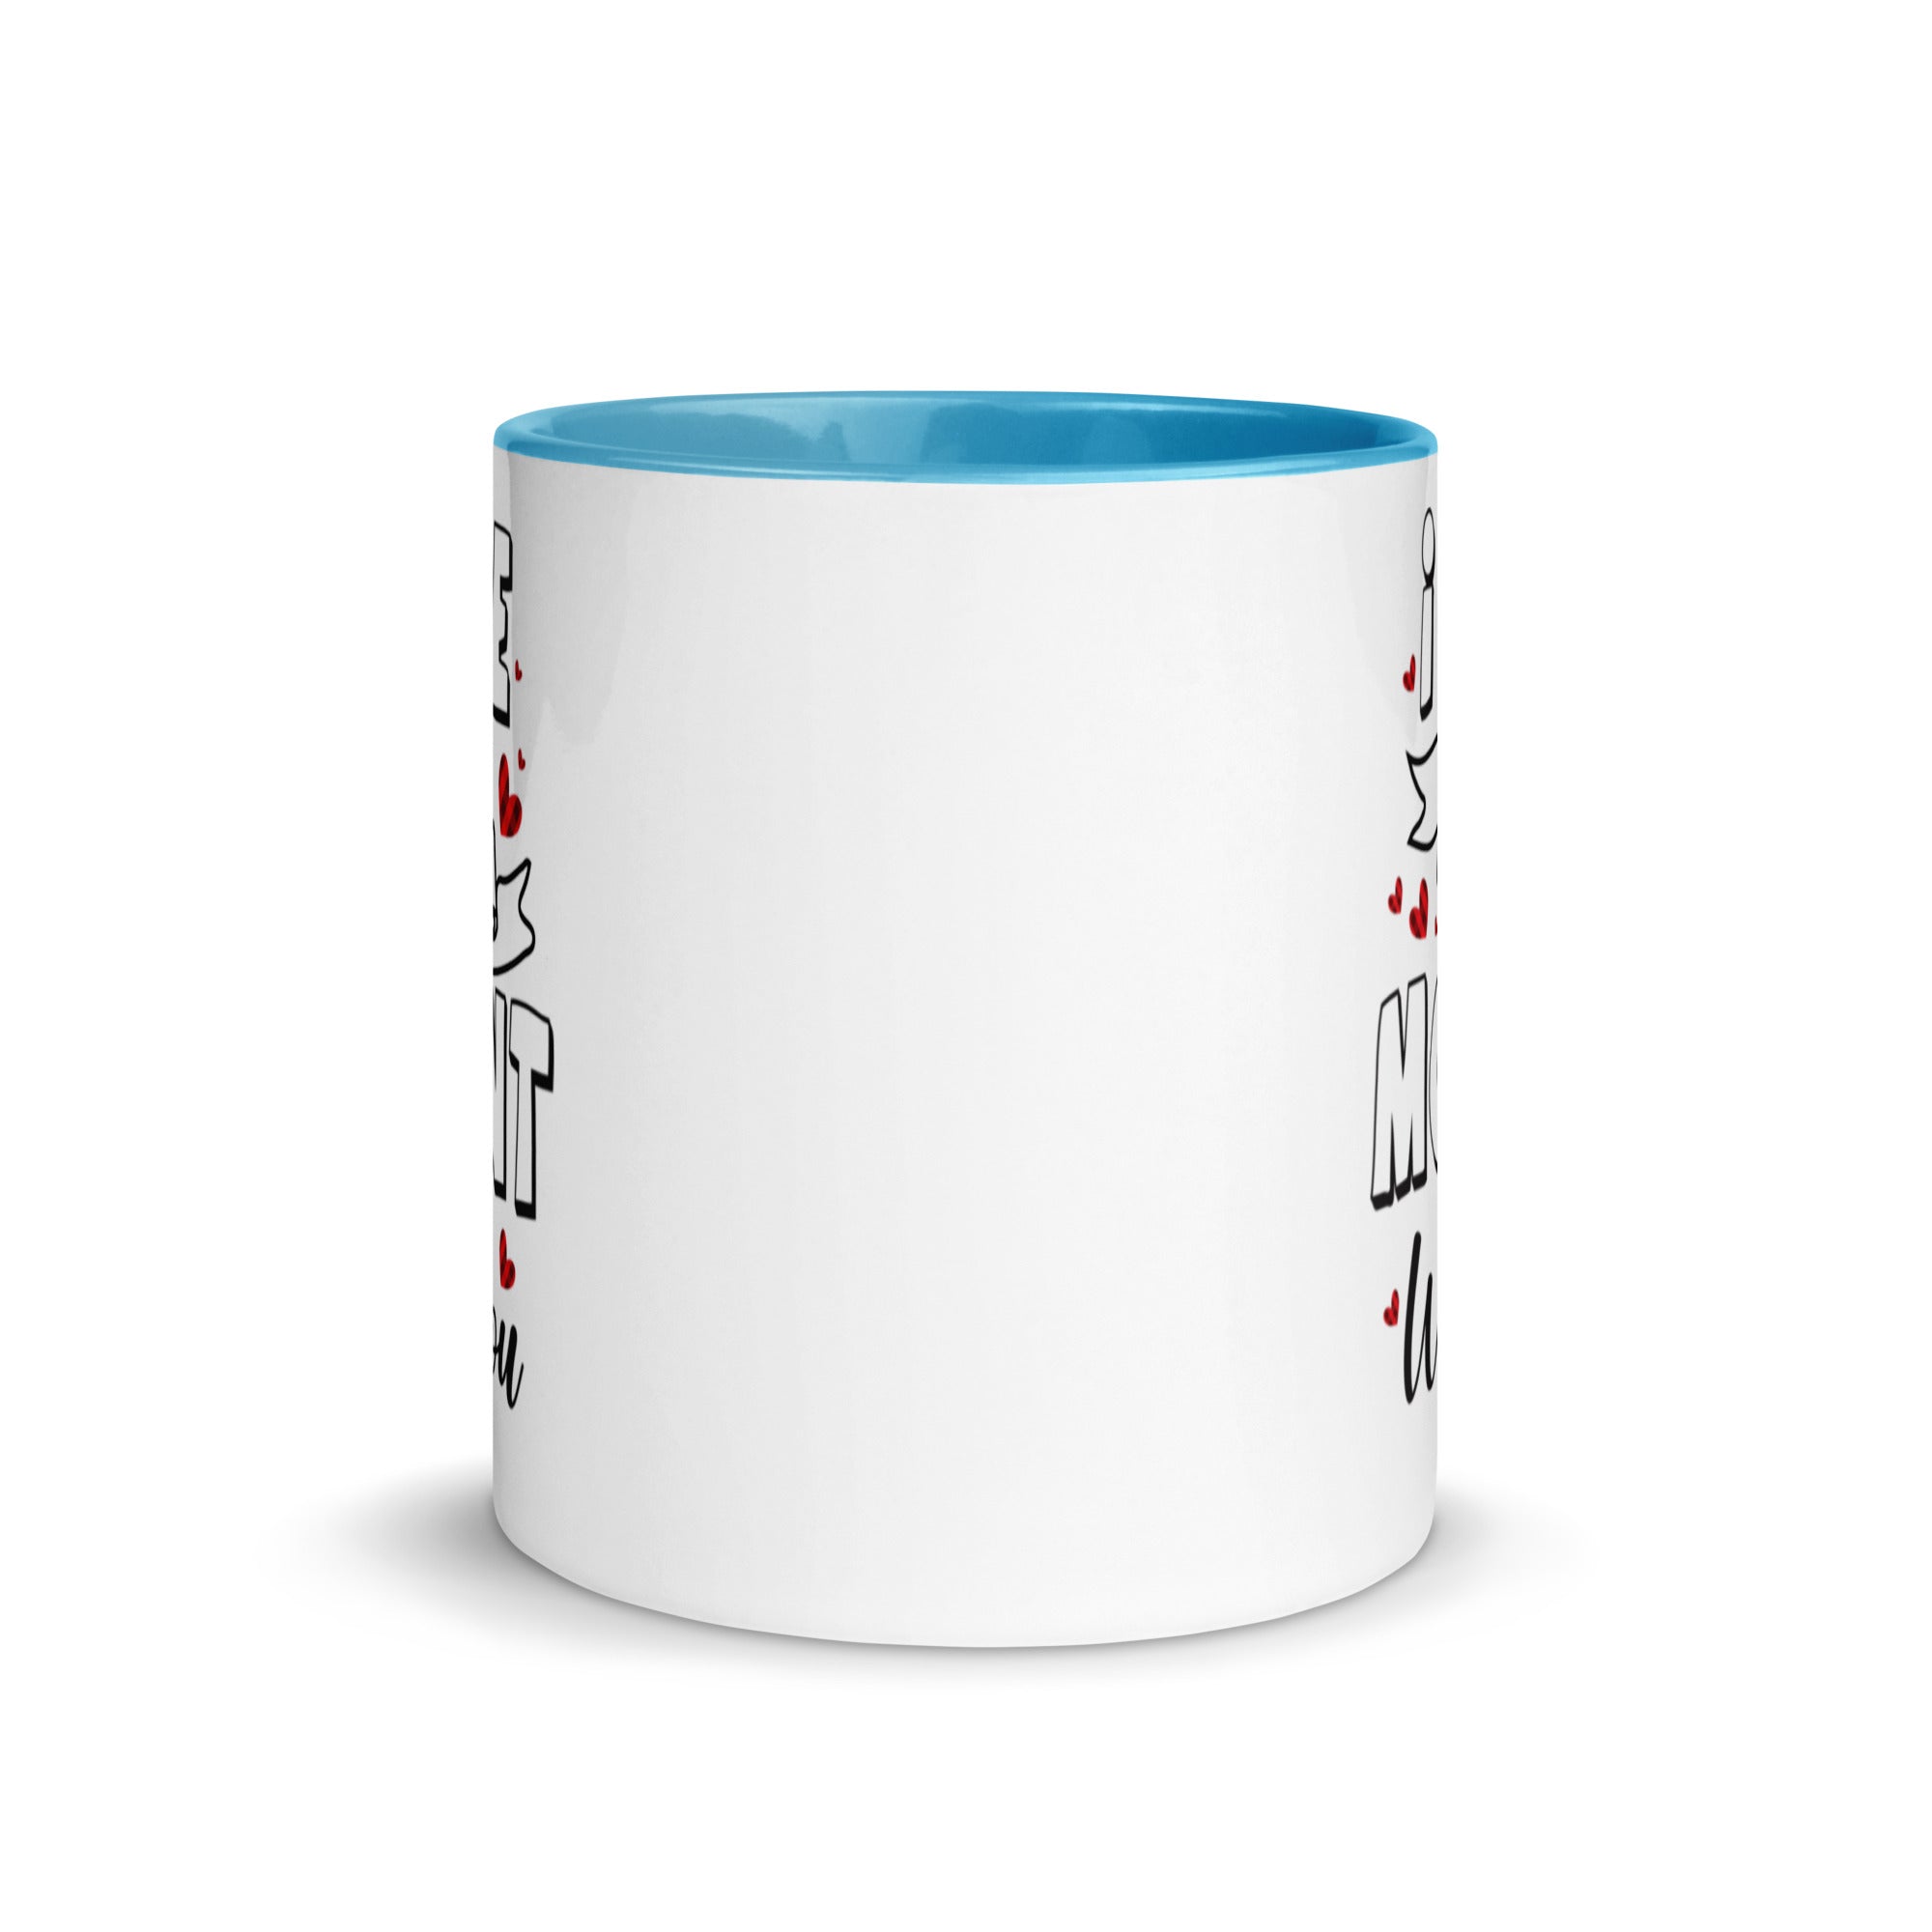 Mug with Color Inside, Coffee Cup, 11-15 OZ